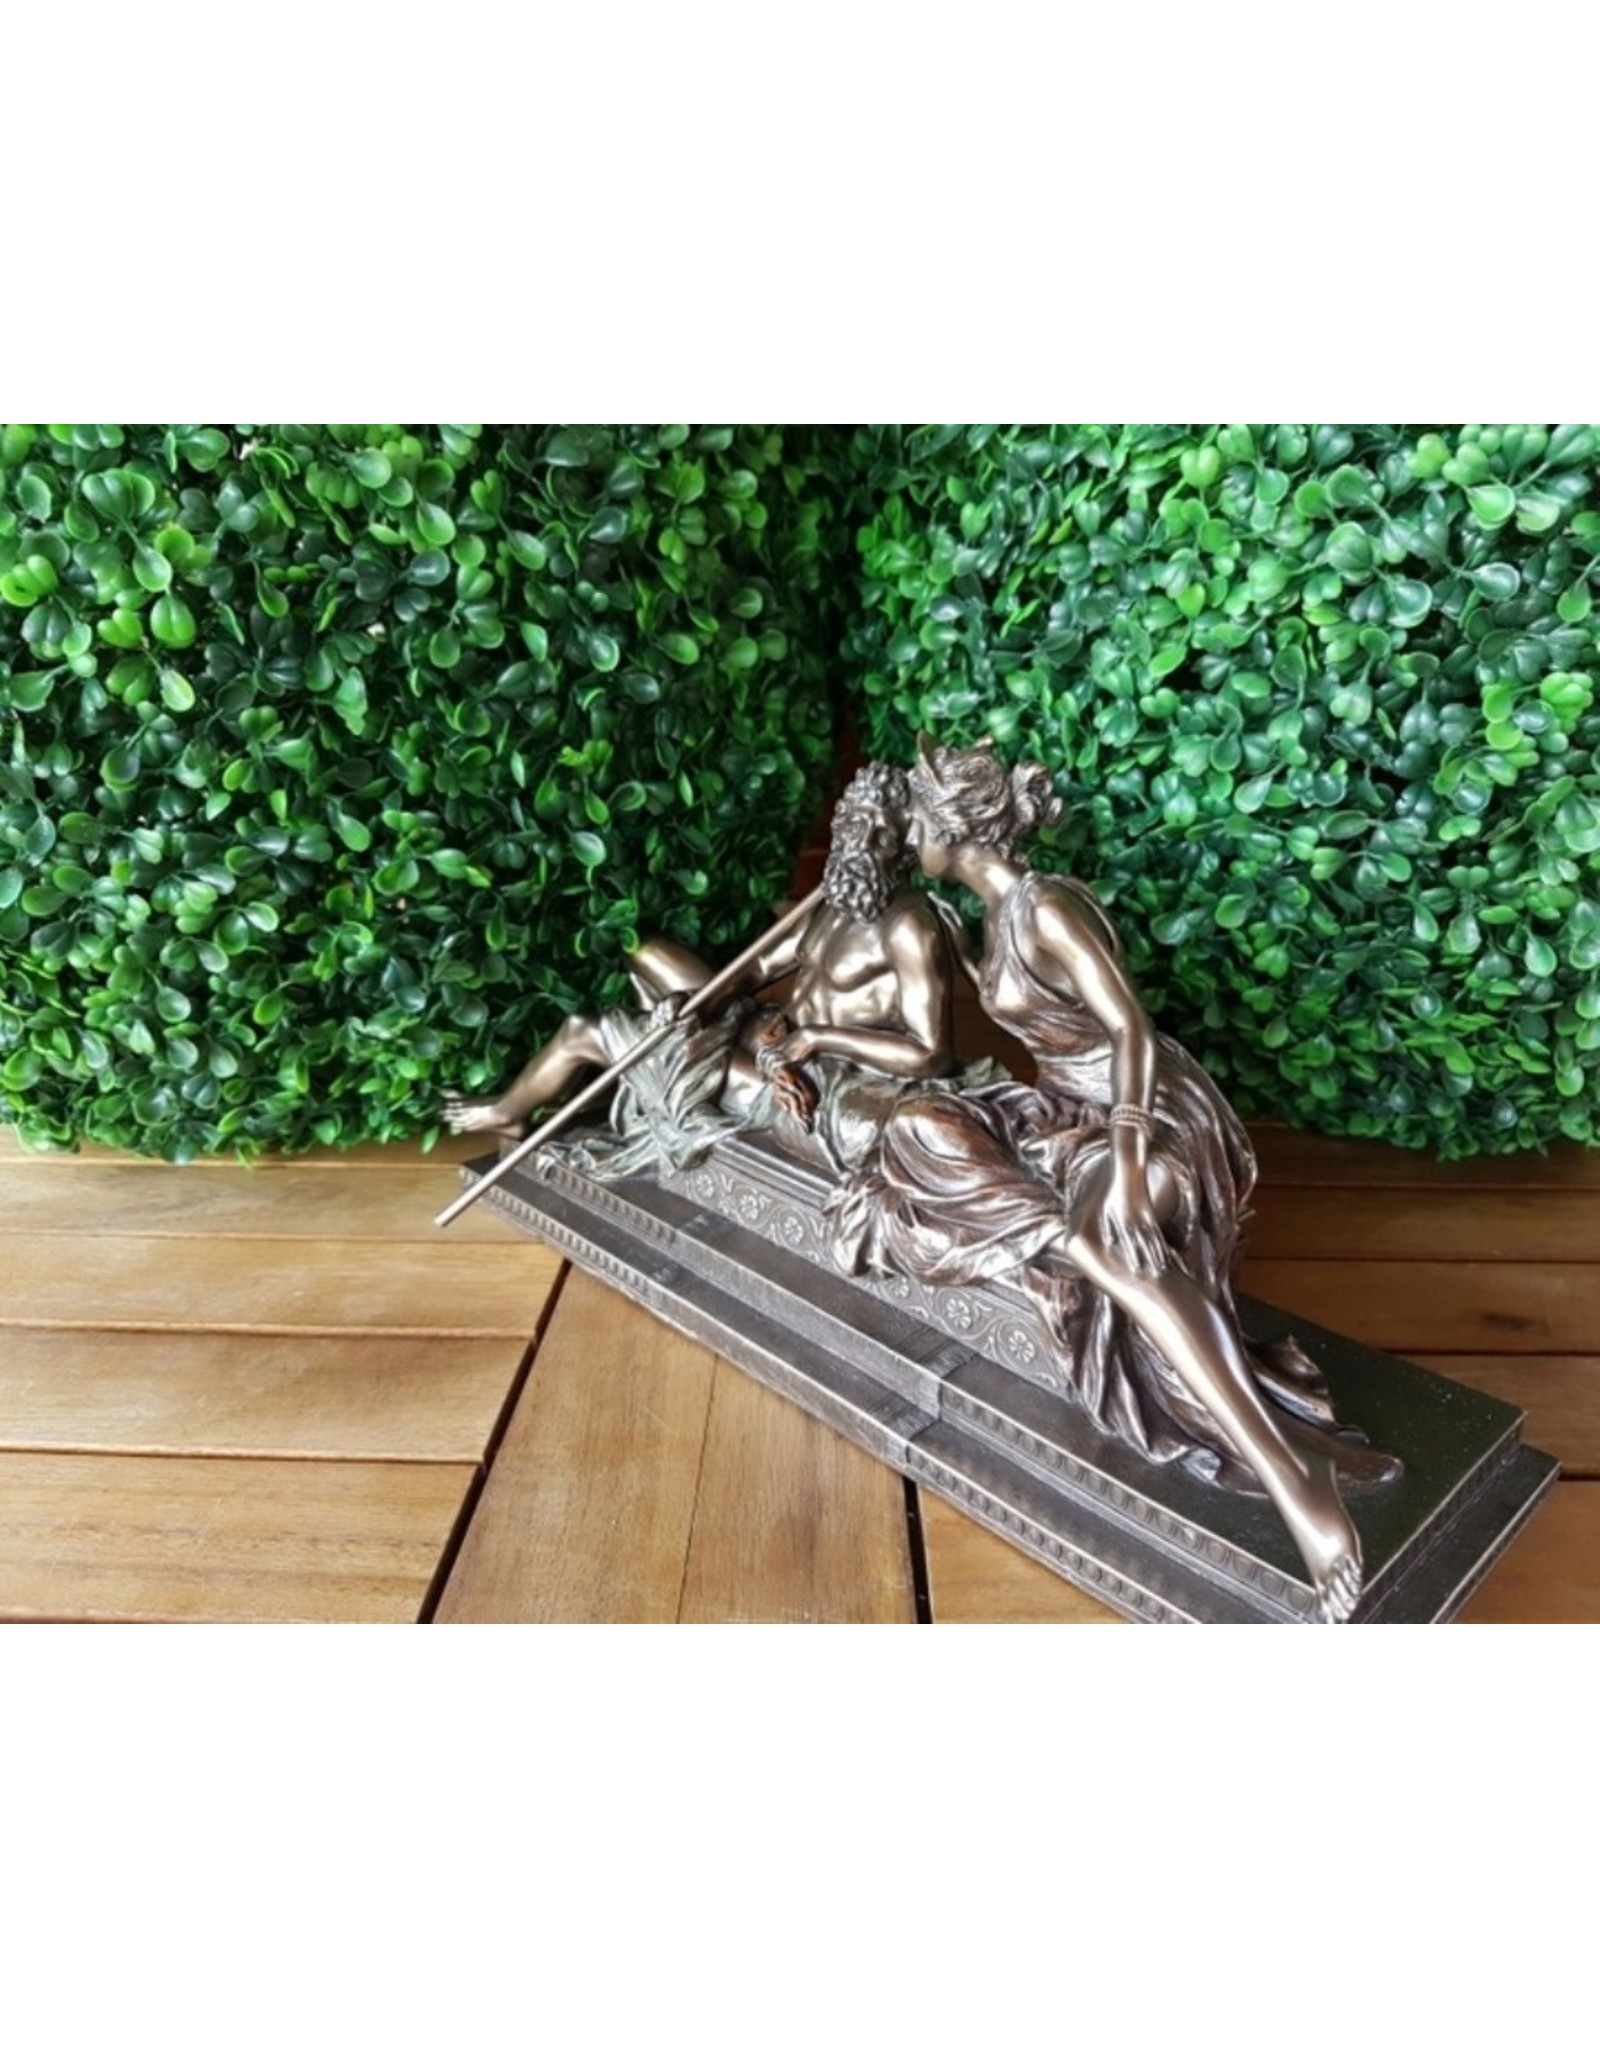 Veronese Design Giftware & Lifestyle -  Zeus and Hera Sitting Together Bronzed Figurine